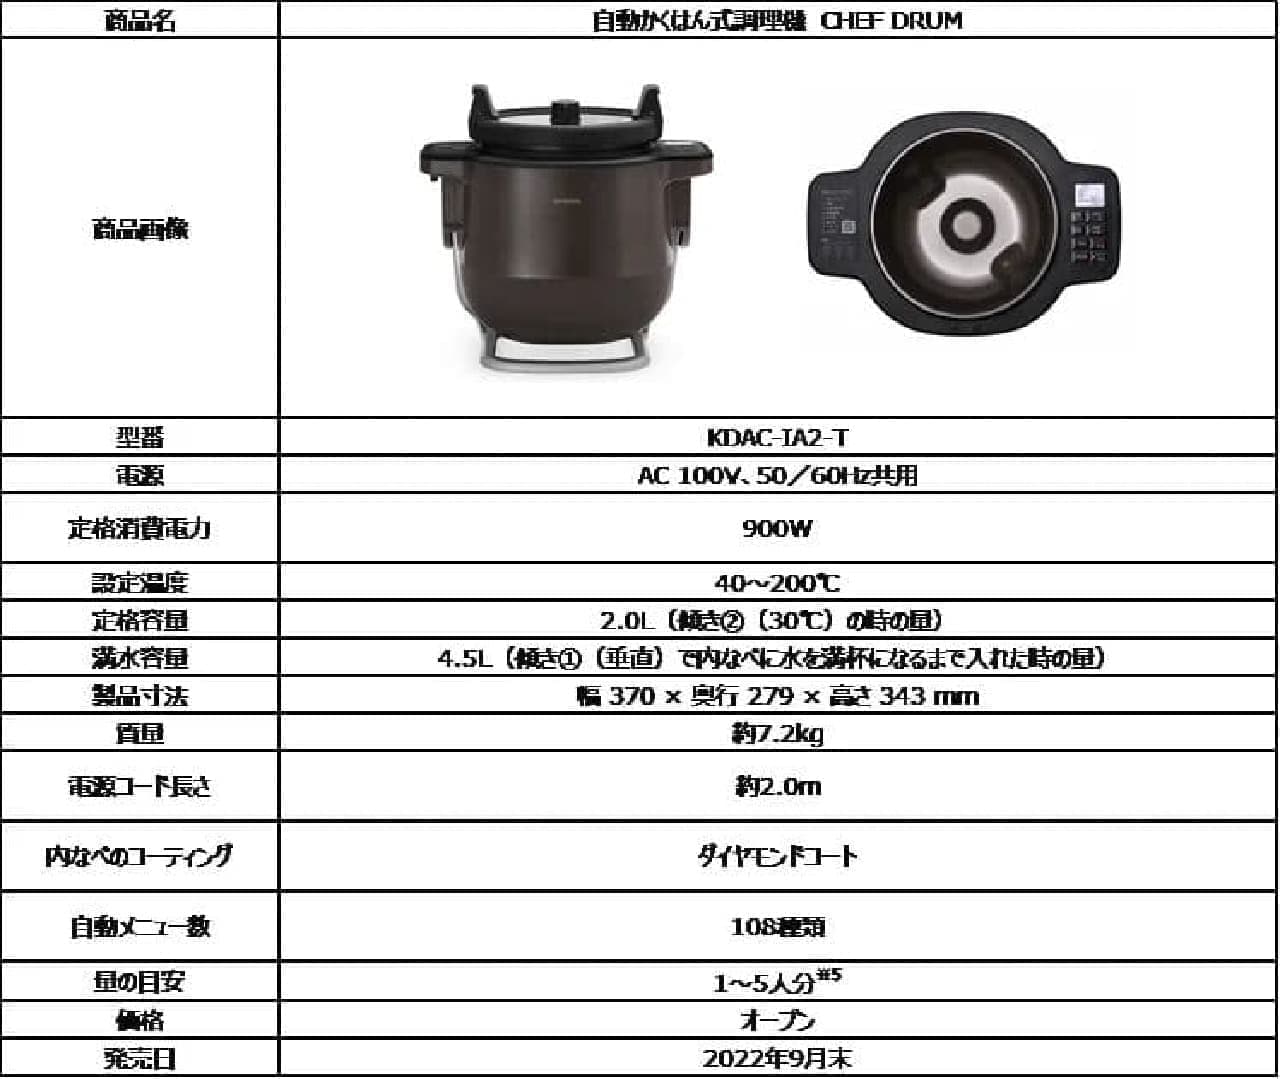 Iris Oyama "CHEF DRUM" automatic stirring cooker